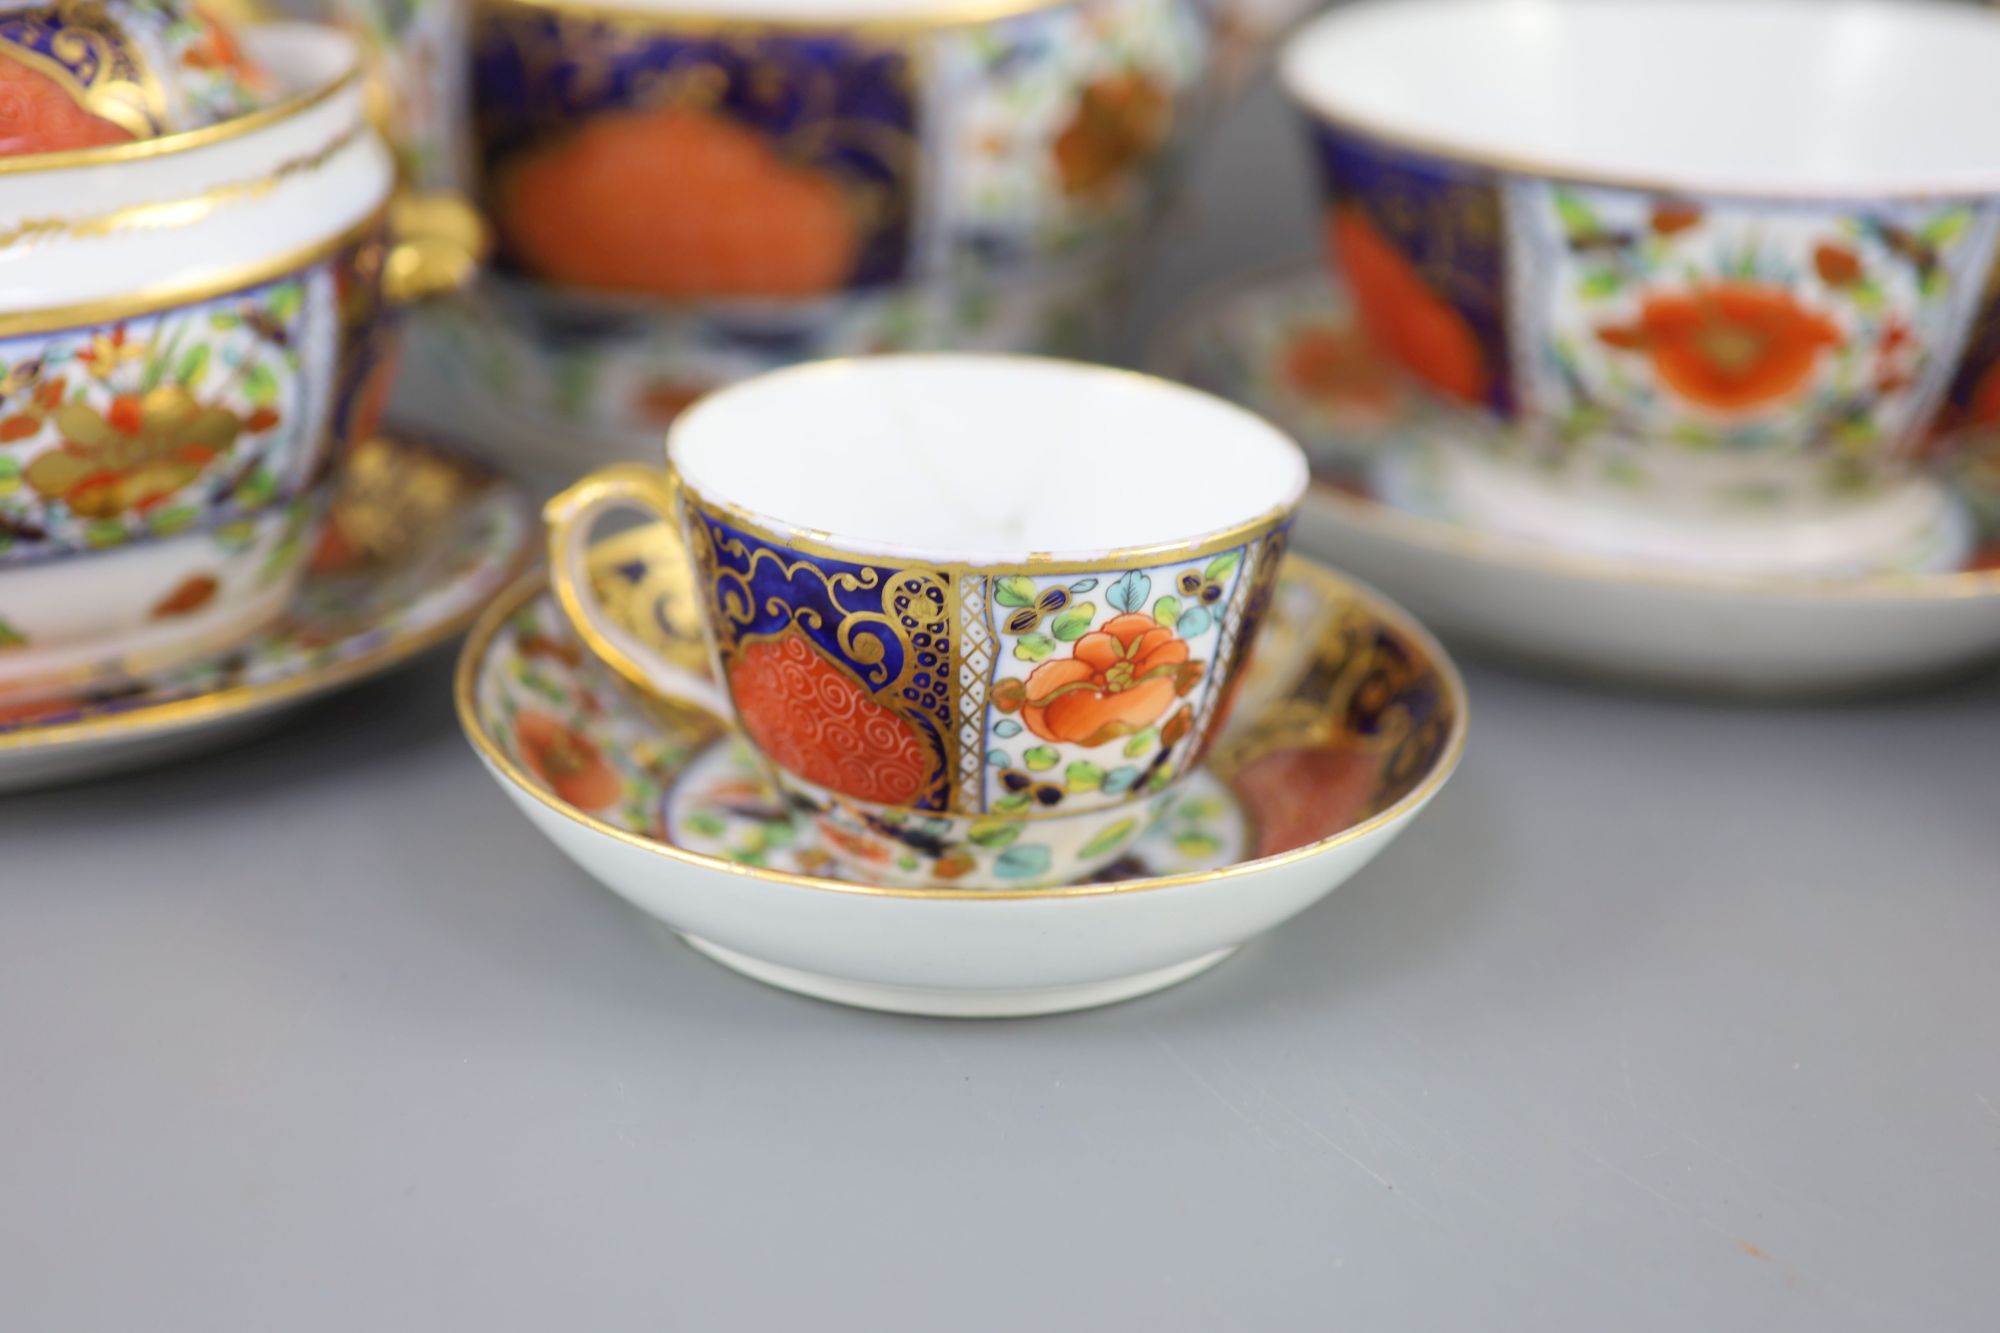 A Herculaneum porcelain Imari pattern 8080 part tea and coffee set, c.1812-15,